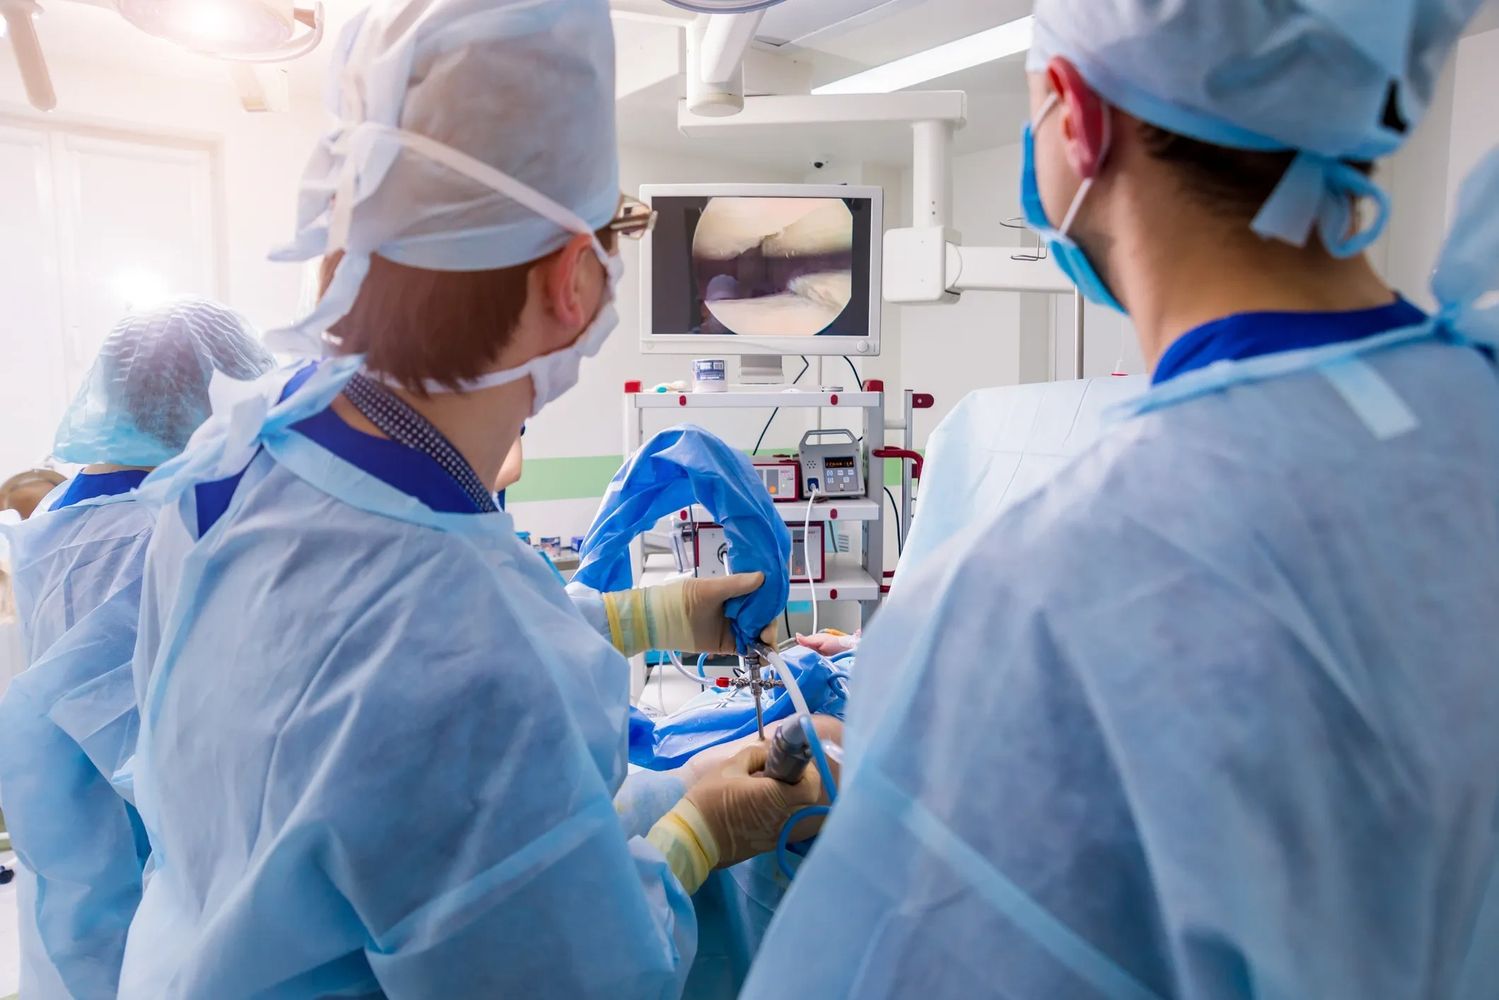 Endoscopic surgery